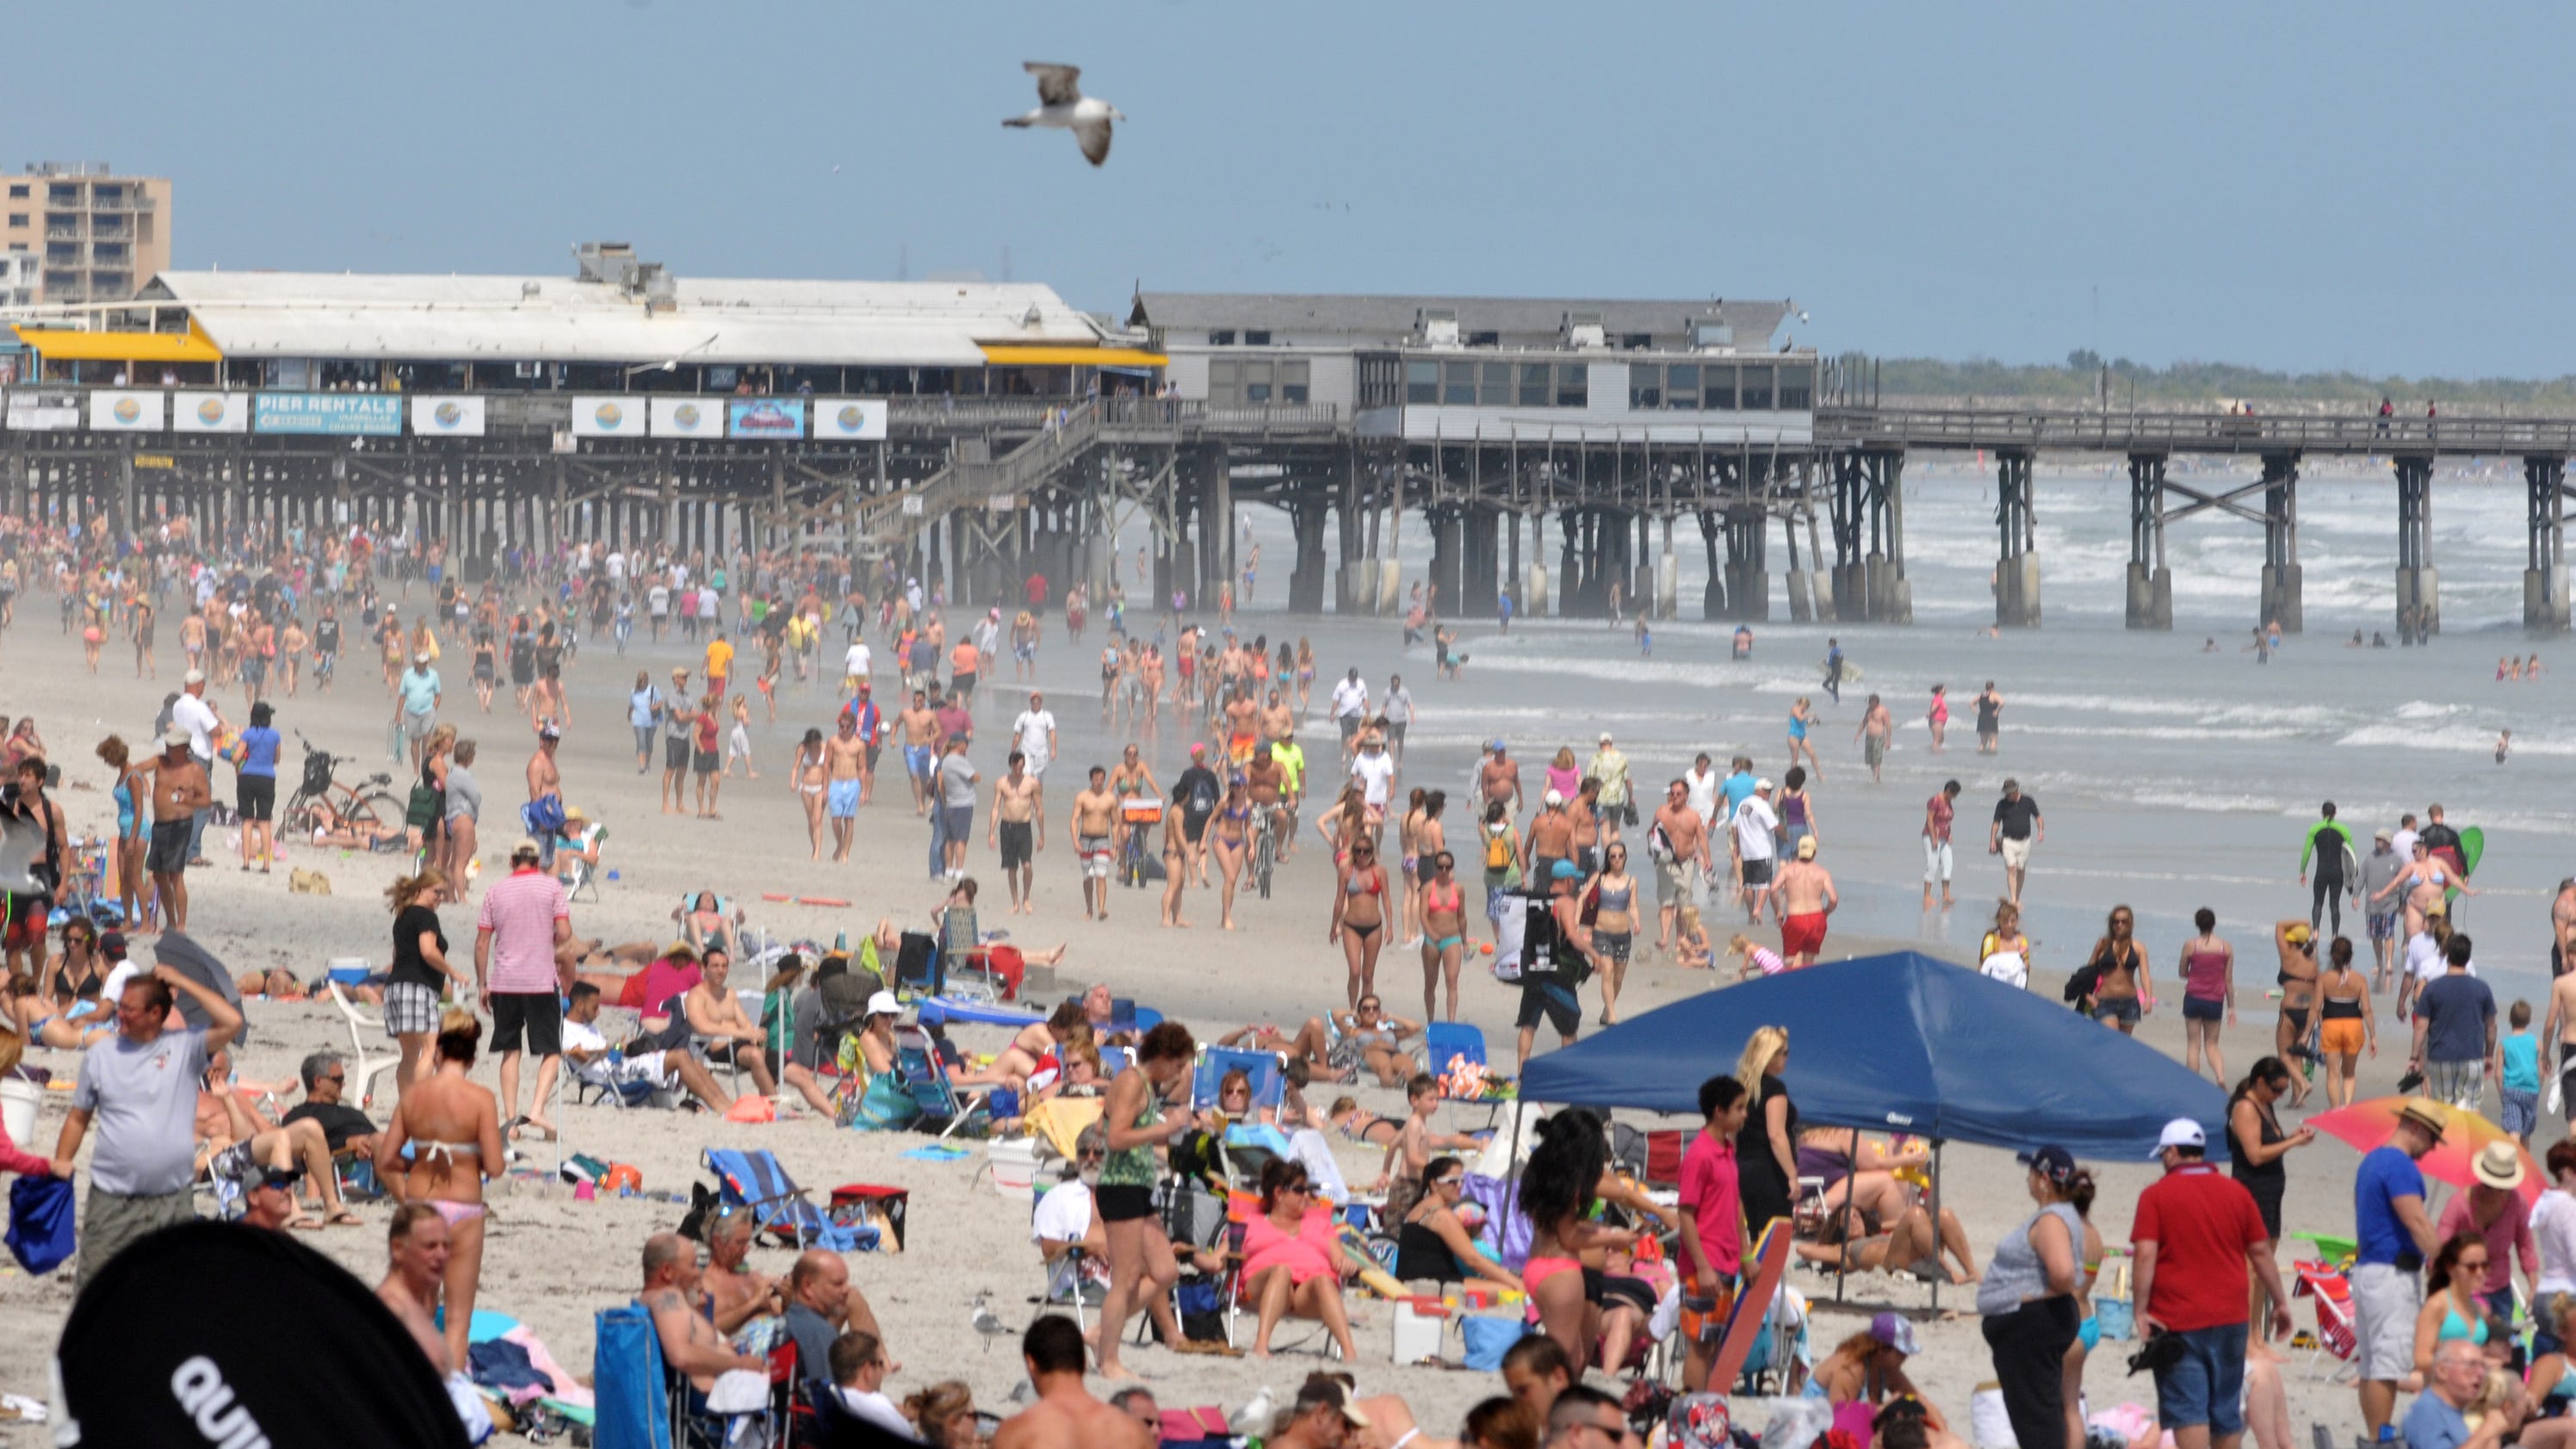 Cocoa Beach avoids drinking ban on beach